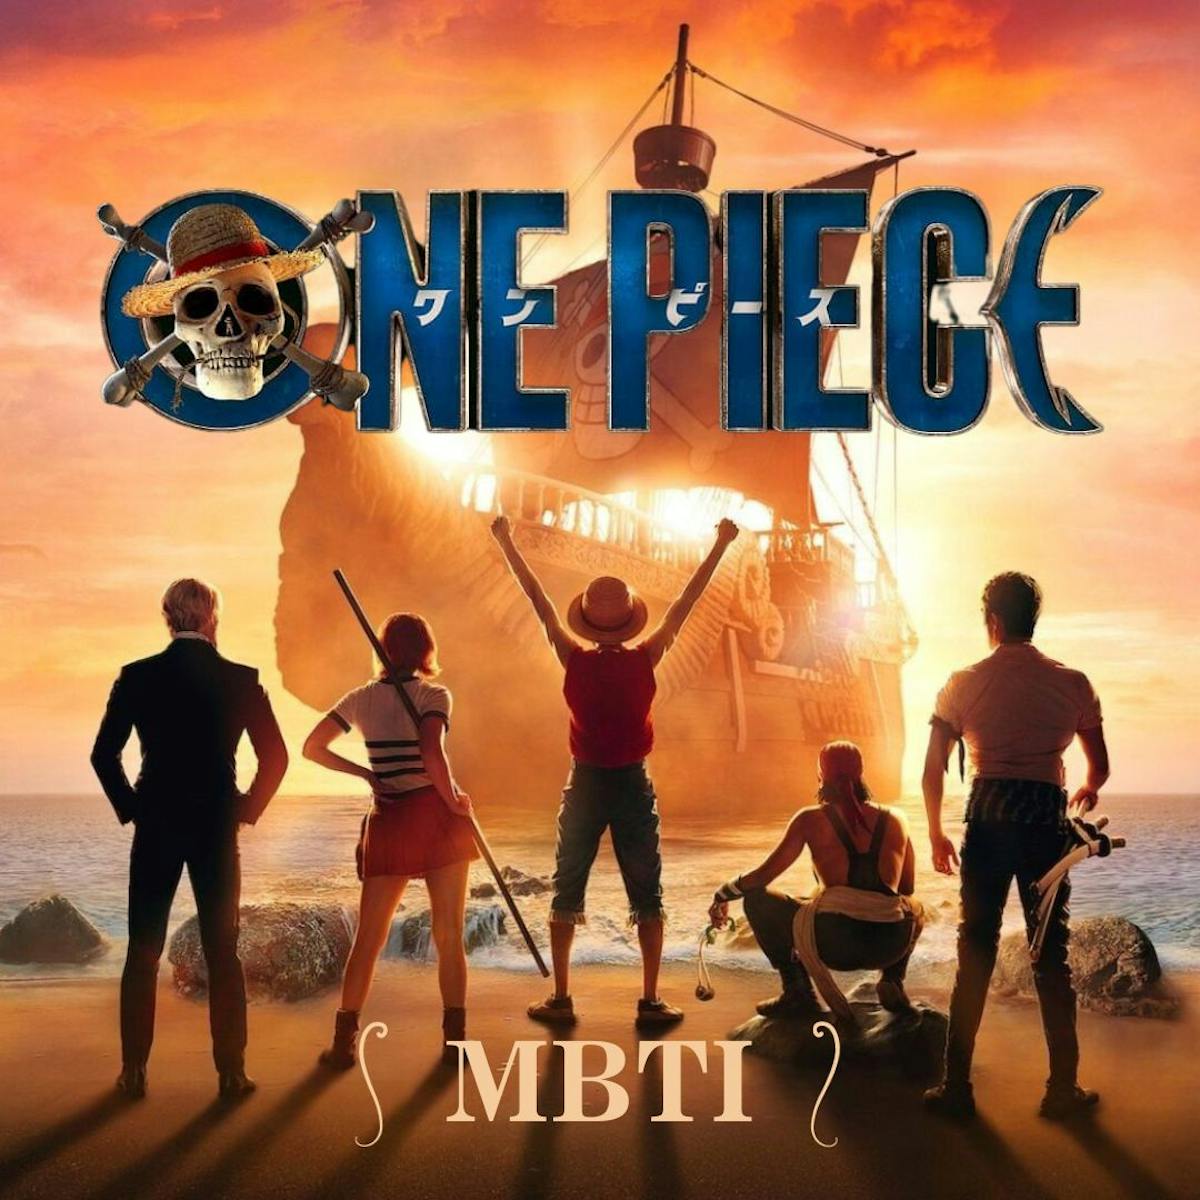 One Piece Personality Types MBTI